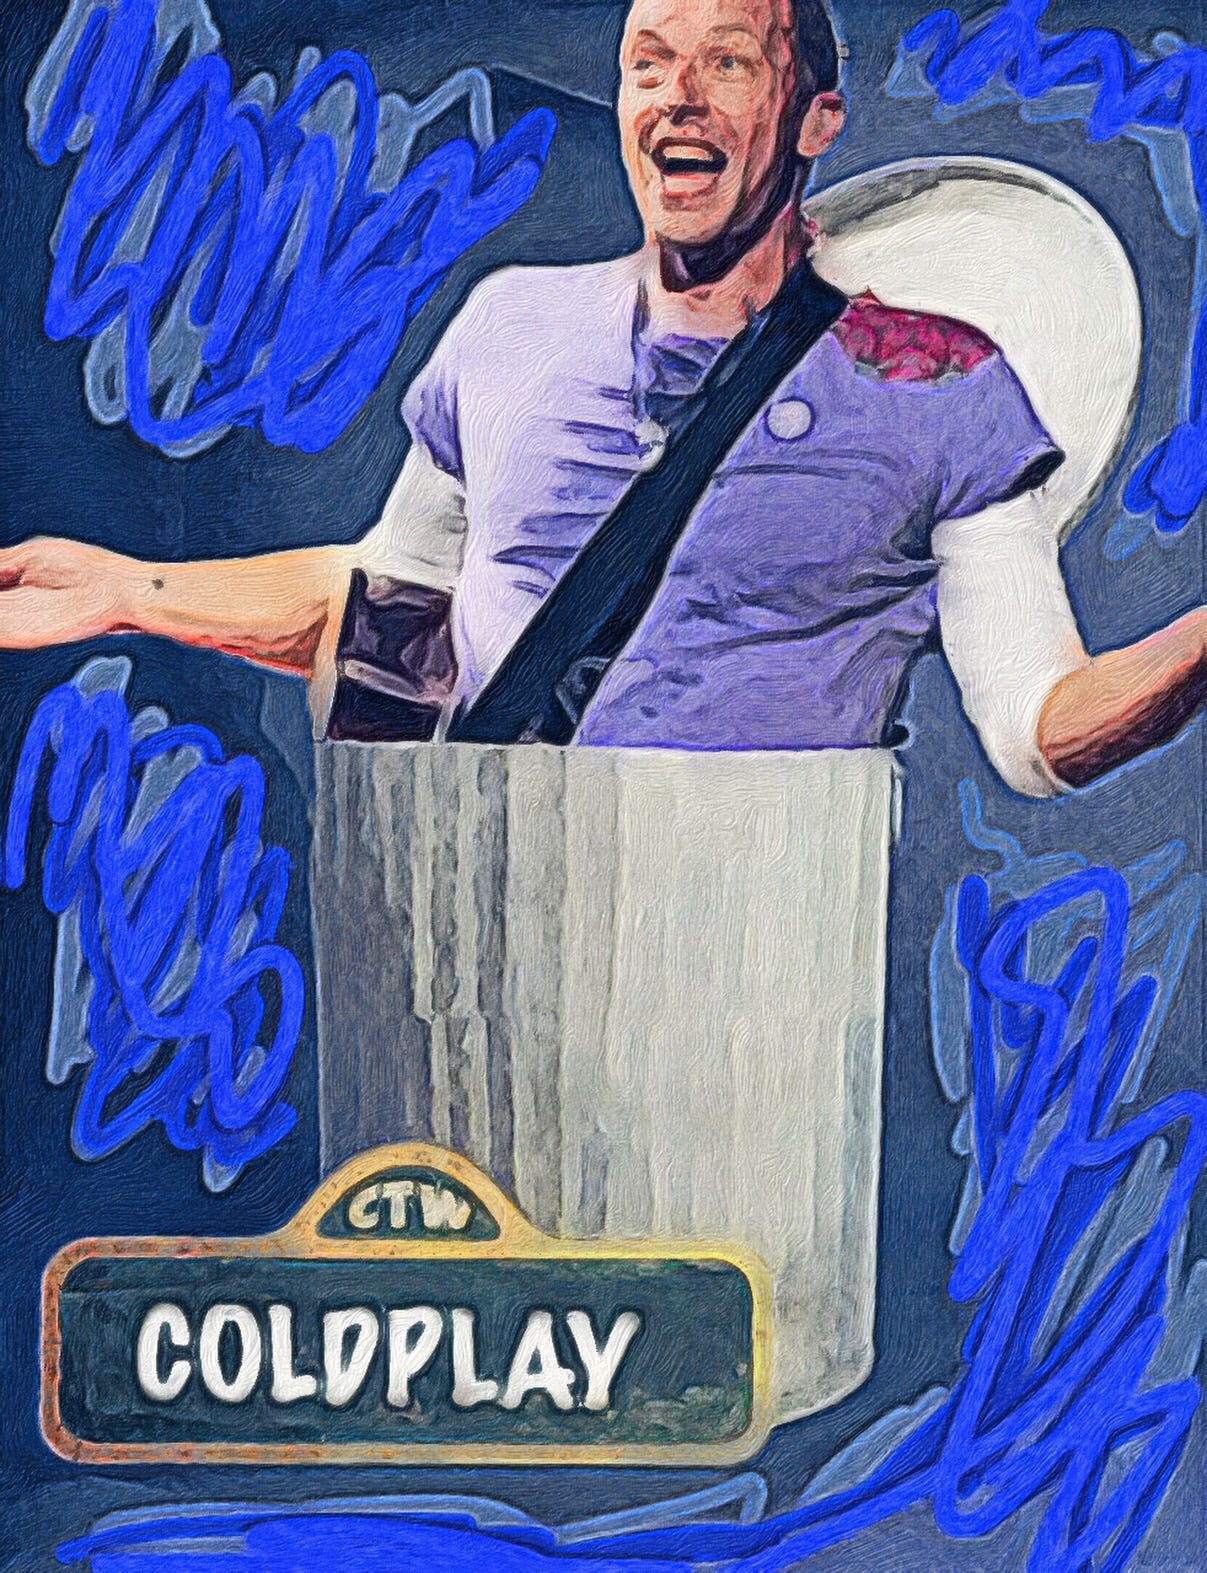 Coldplay Sucks. Fuck Coldplay.